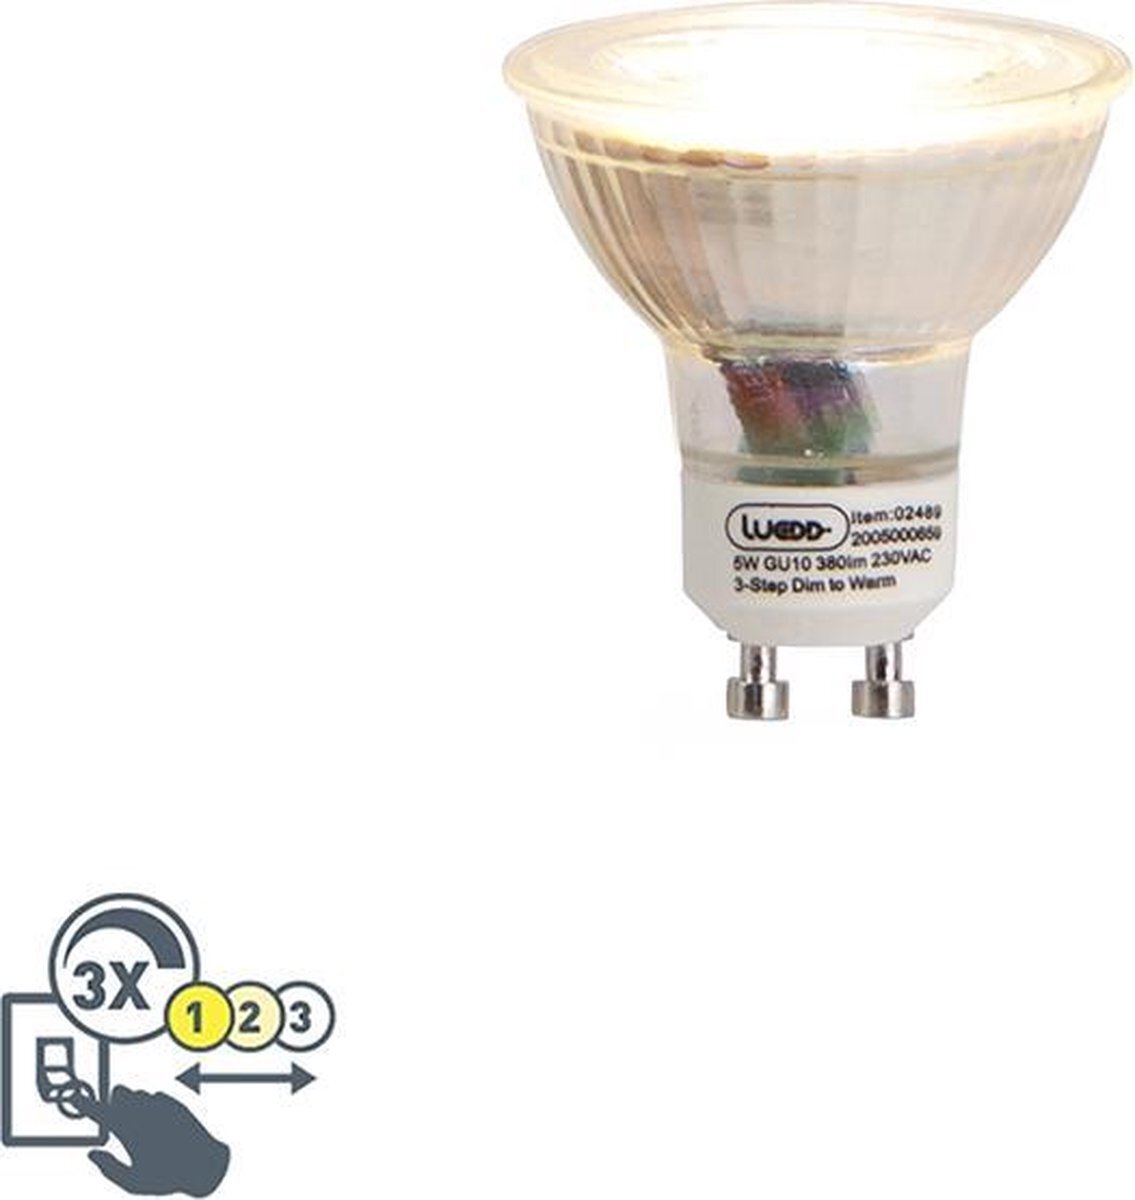 LUEDD GU10 3-staps dim to warm LED lamp 5w 380 lm 2000-2700K